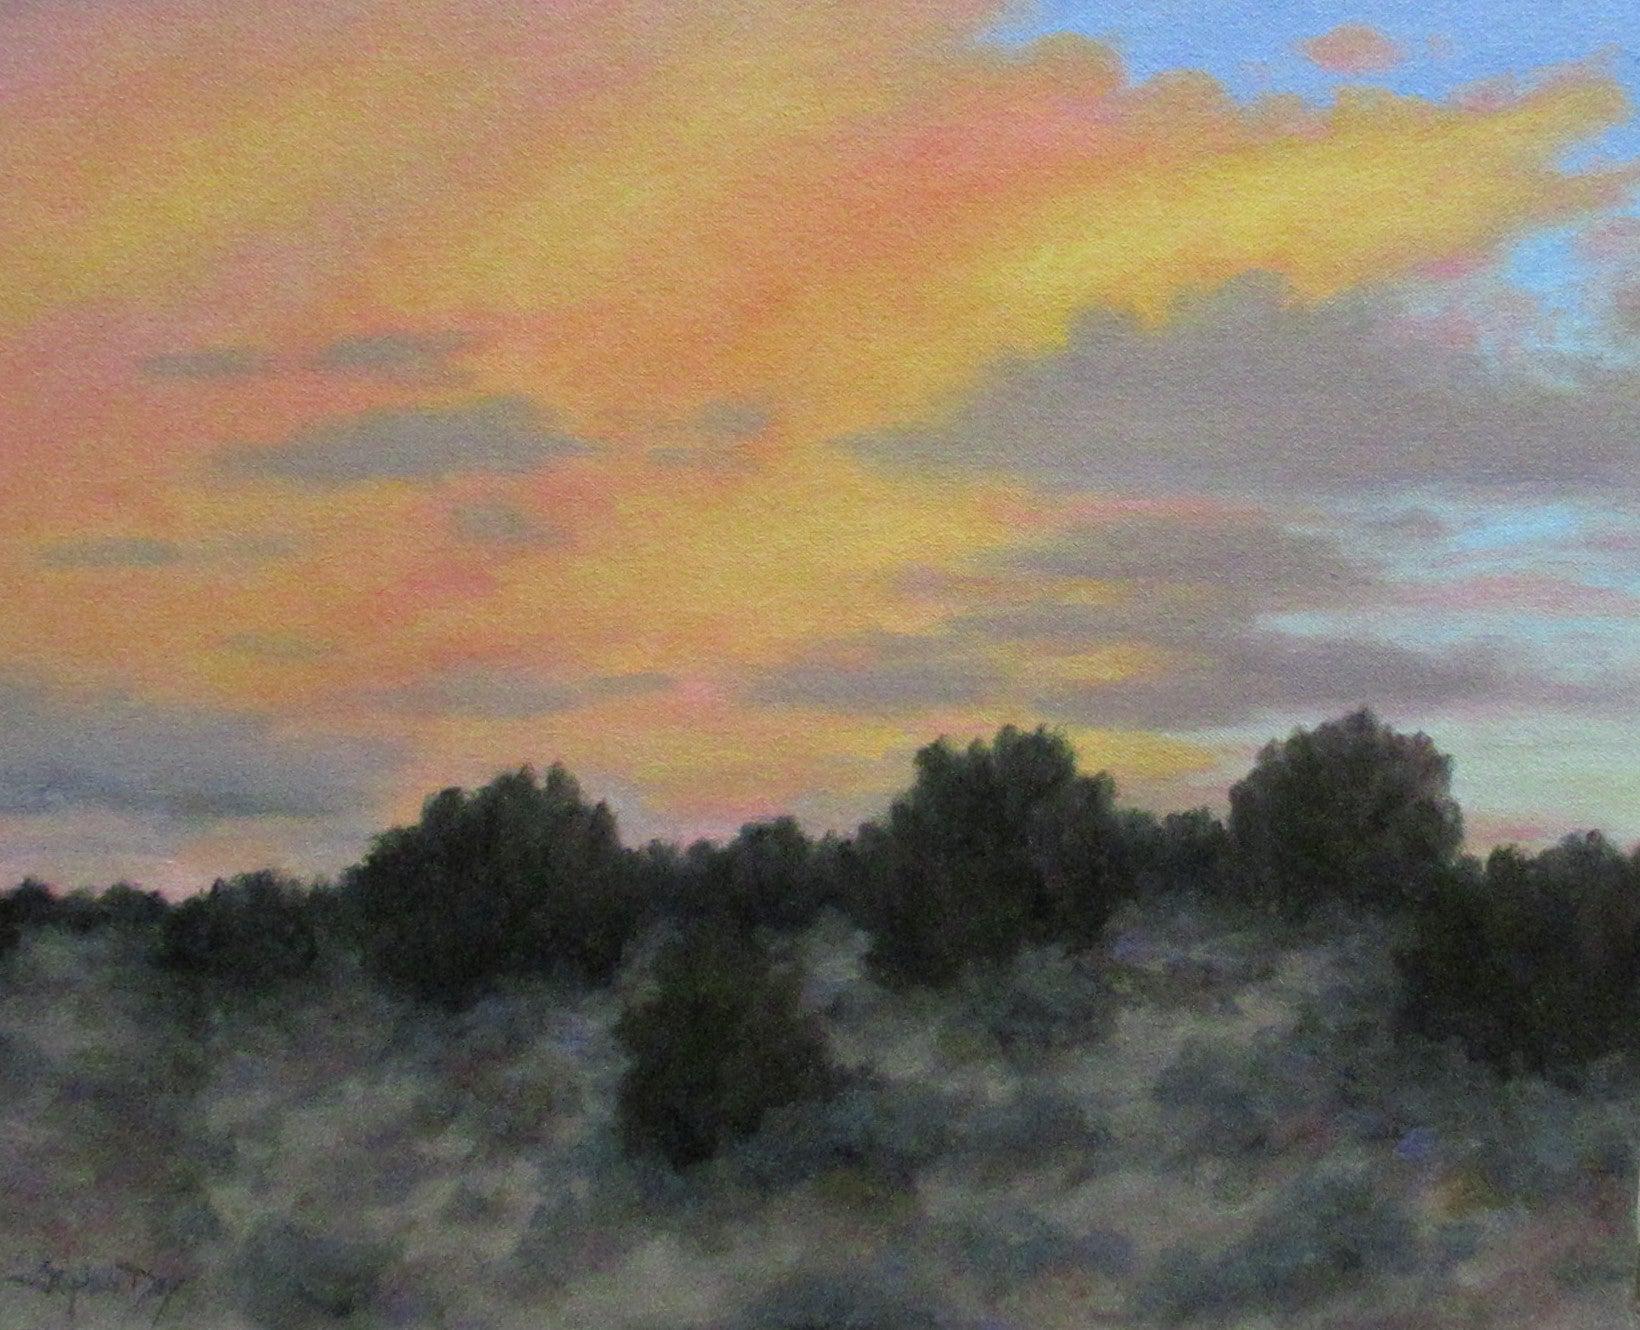 Evening Brightness-Painting-Stephen Day-Sorrel Sky Gallery